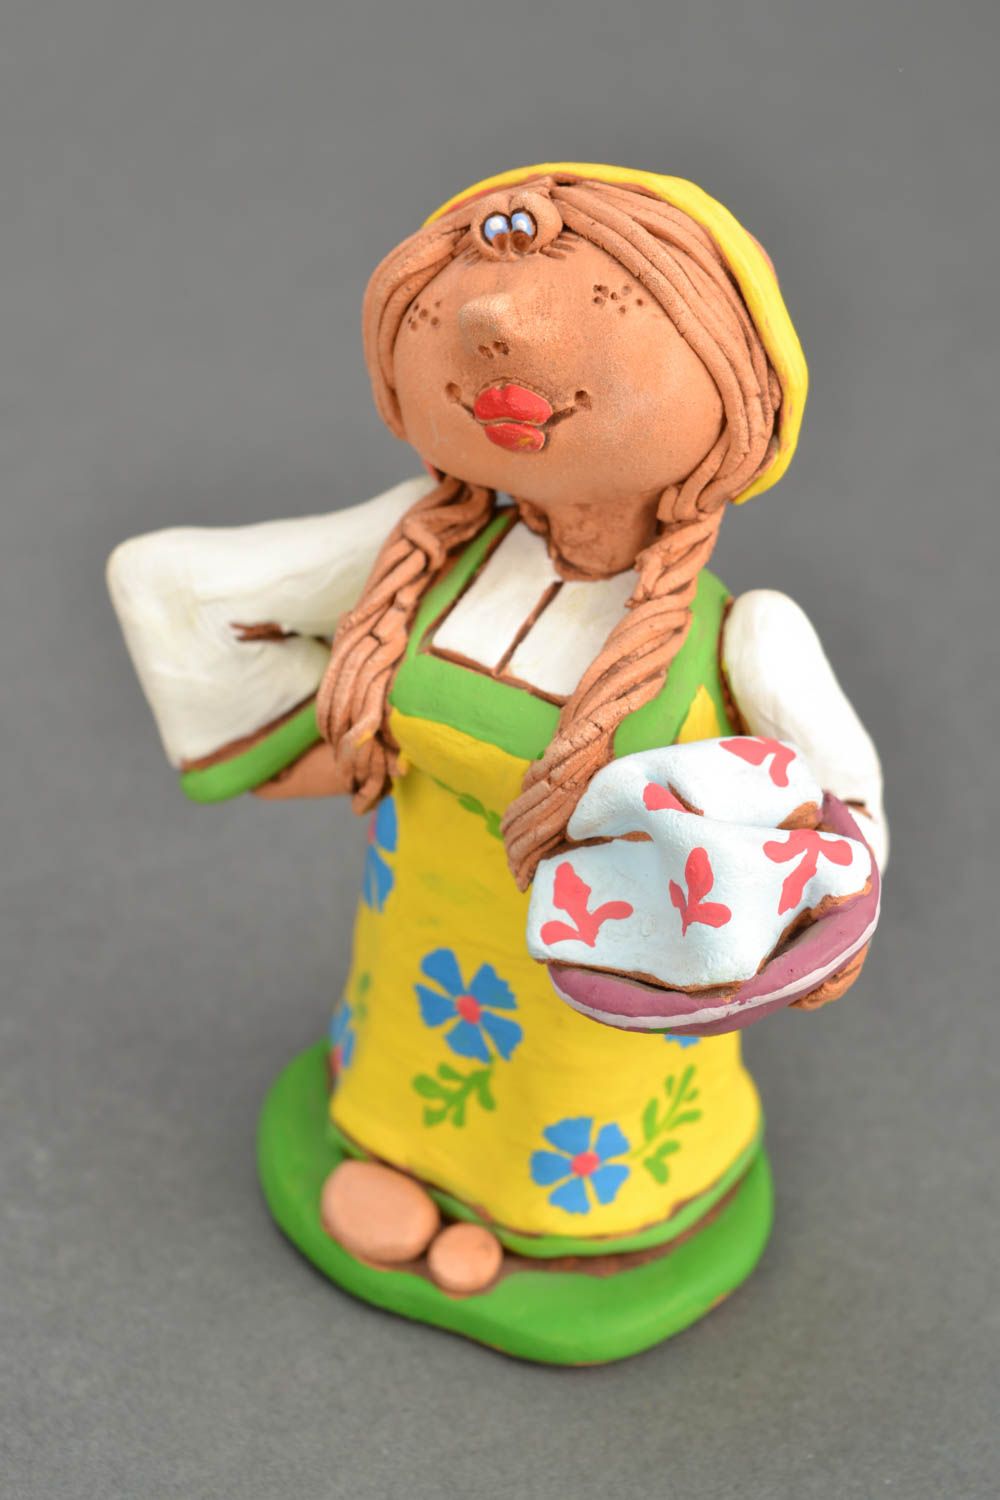 Statuina in ceramica fatta a mano figurina divertente souvenir di argilla foto 3